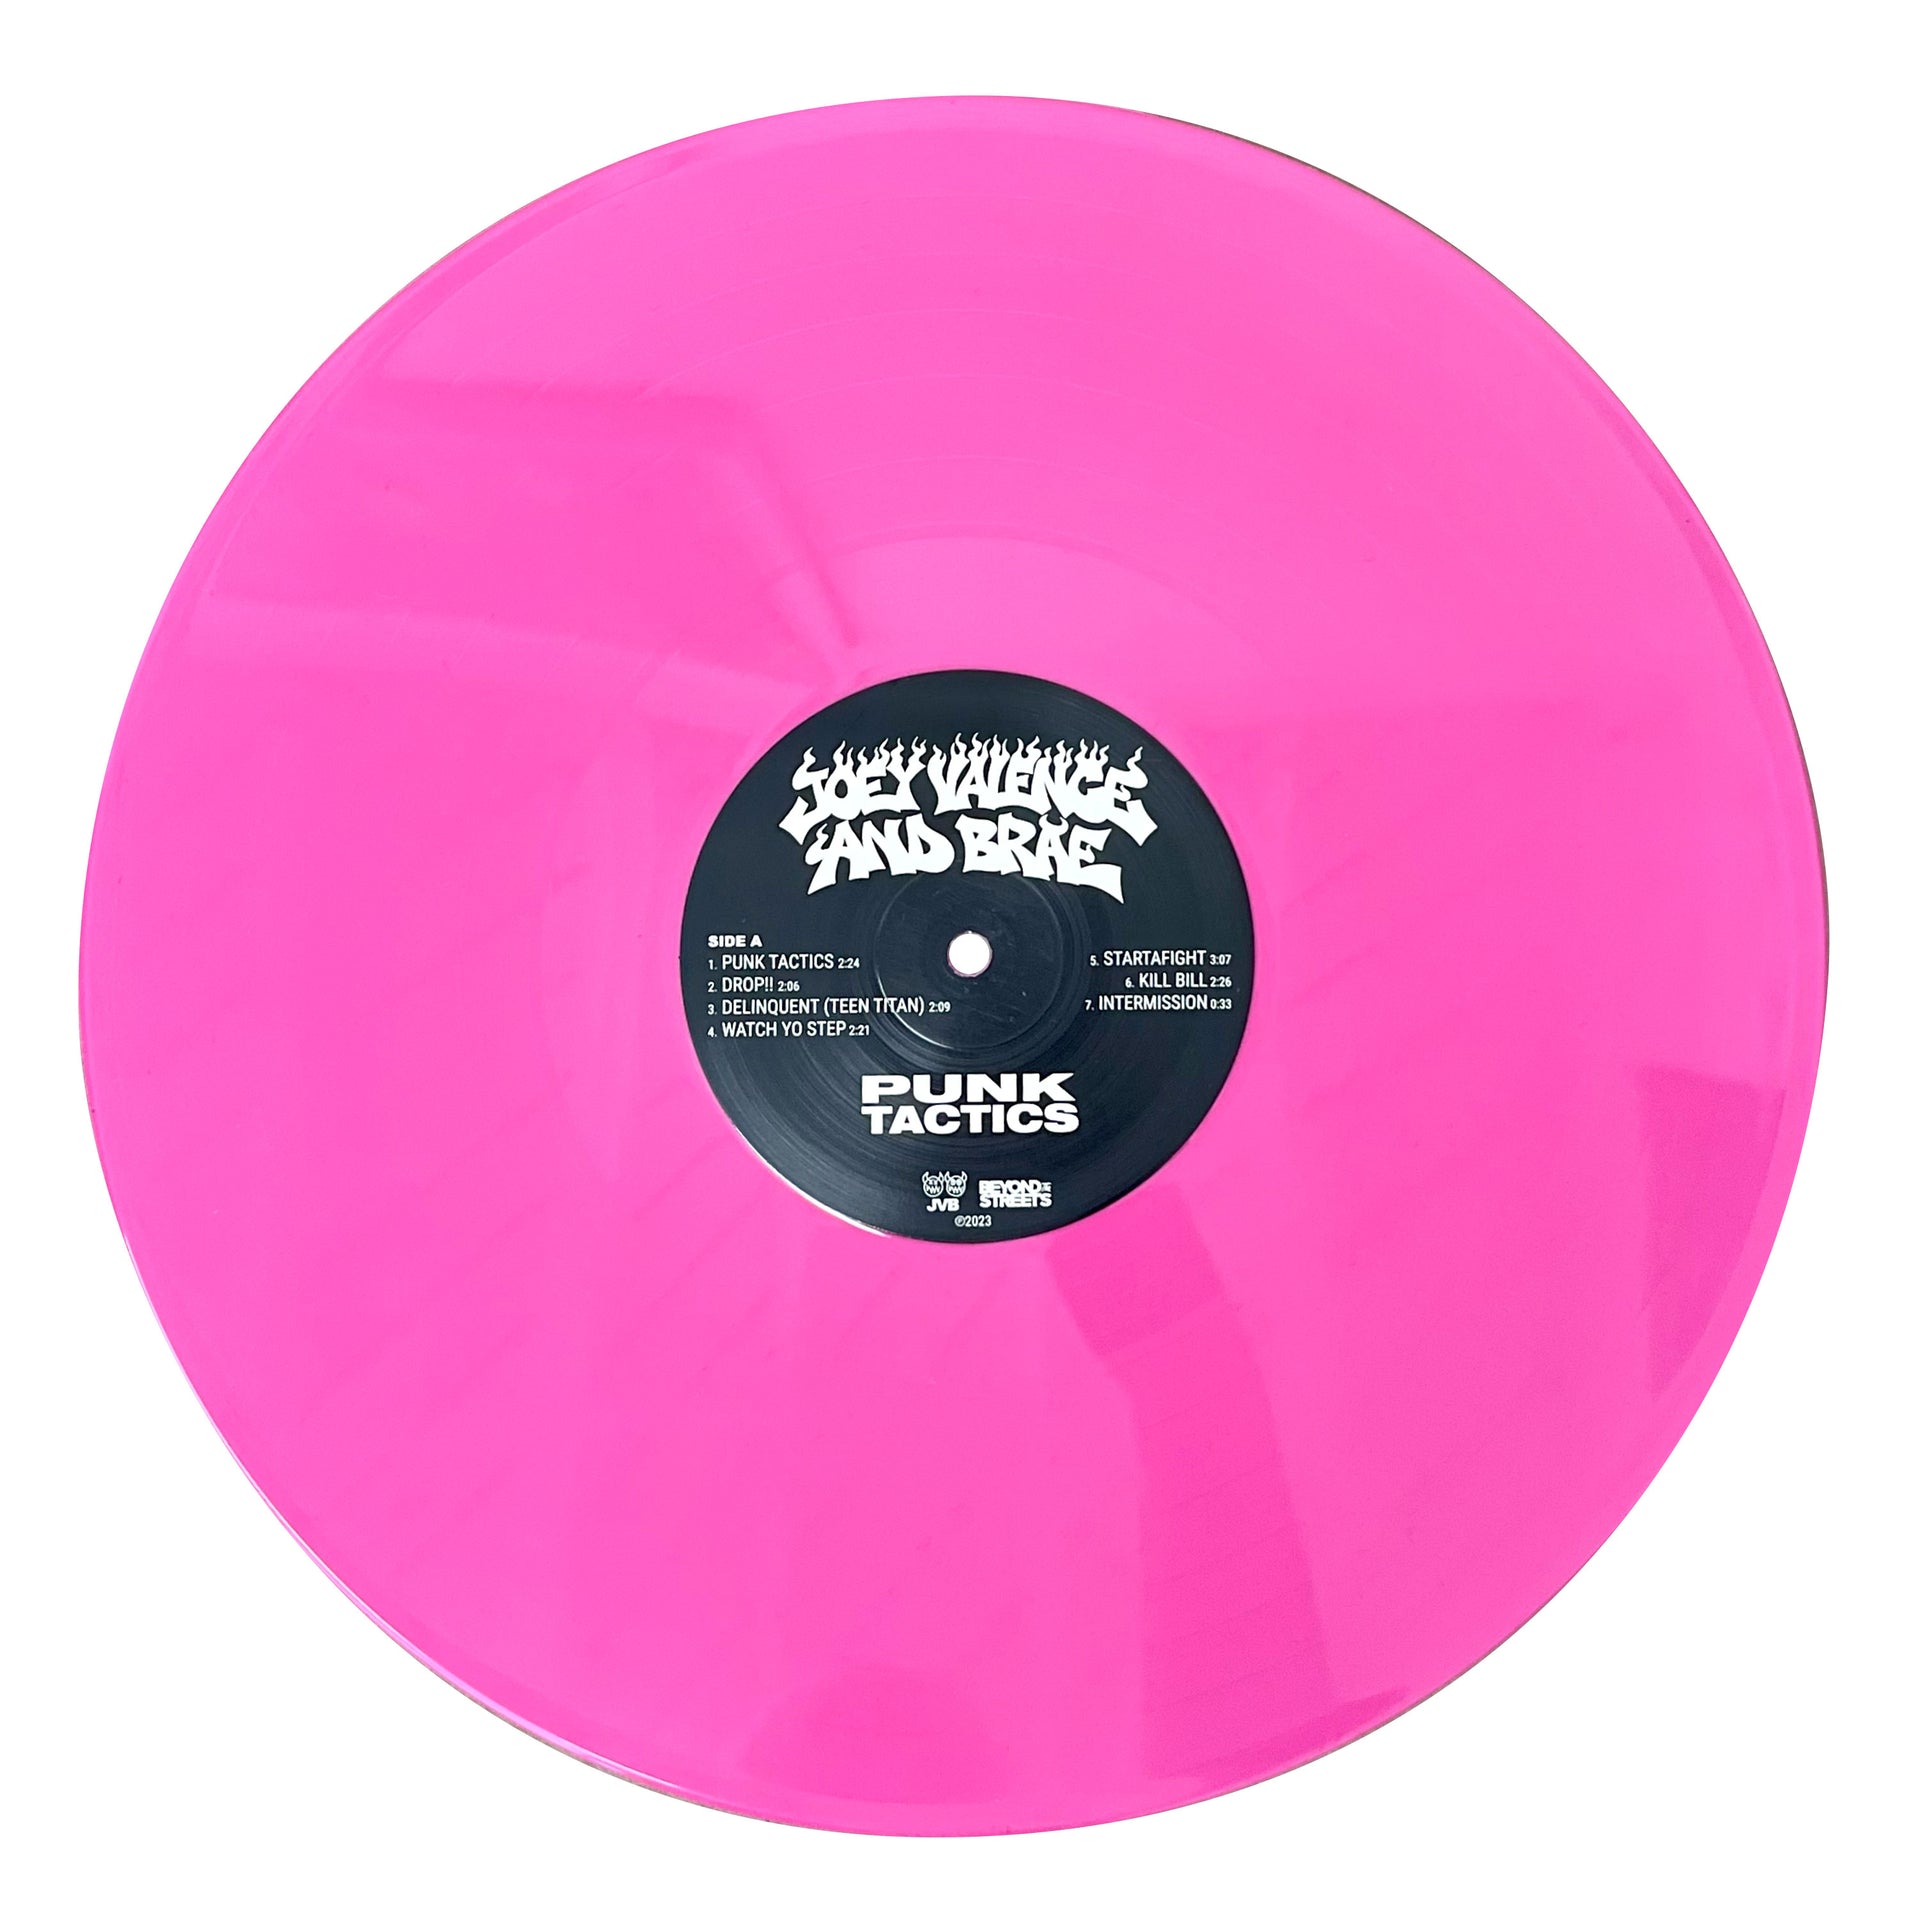 Joey Valence & Brae "PUNK TACTICS LP " Limited Edition Color-Ways Vinyl